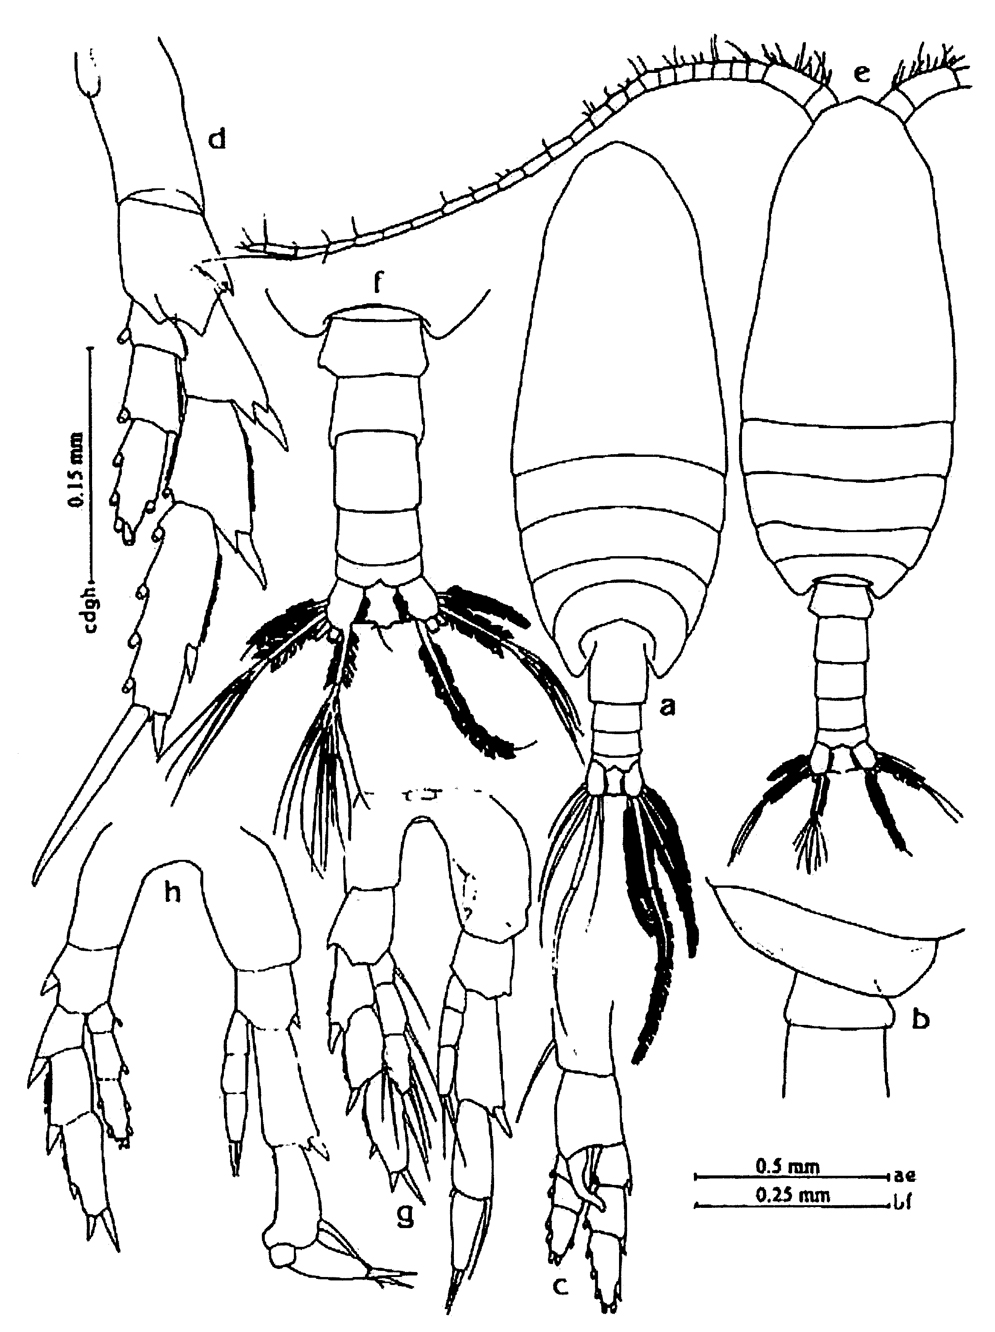 Species Canthocalanus pauper - Plate 12 of morphological figures